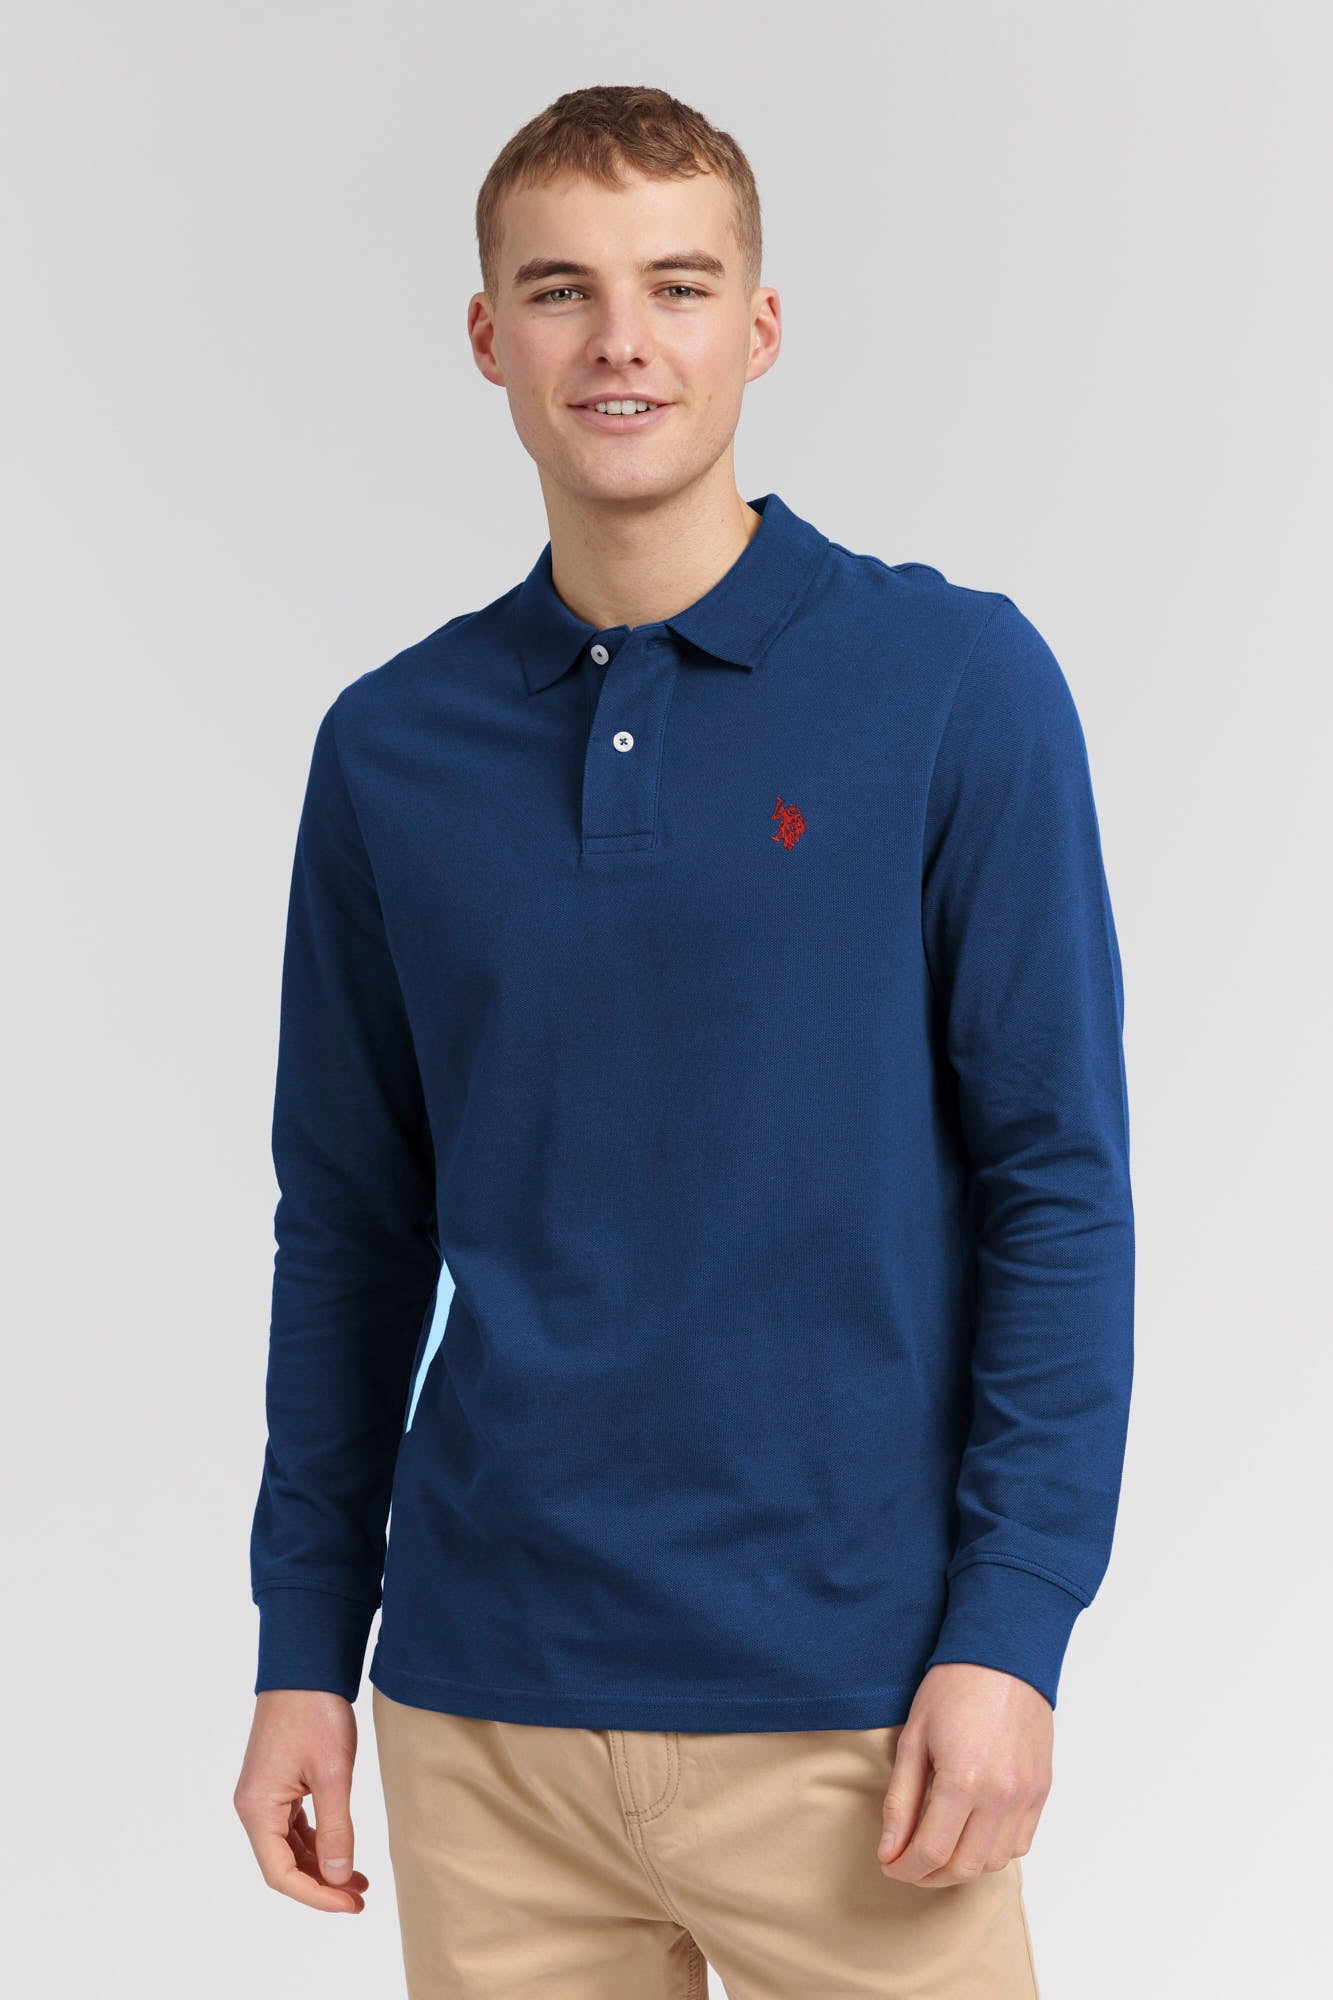 U.S. Polo Assn. Mens Long-Sleeve Polo Shirt in Insignia Blue